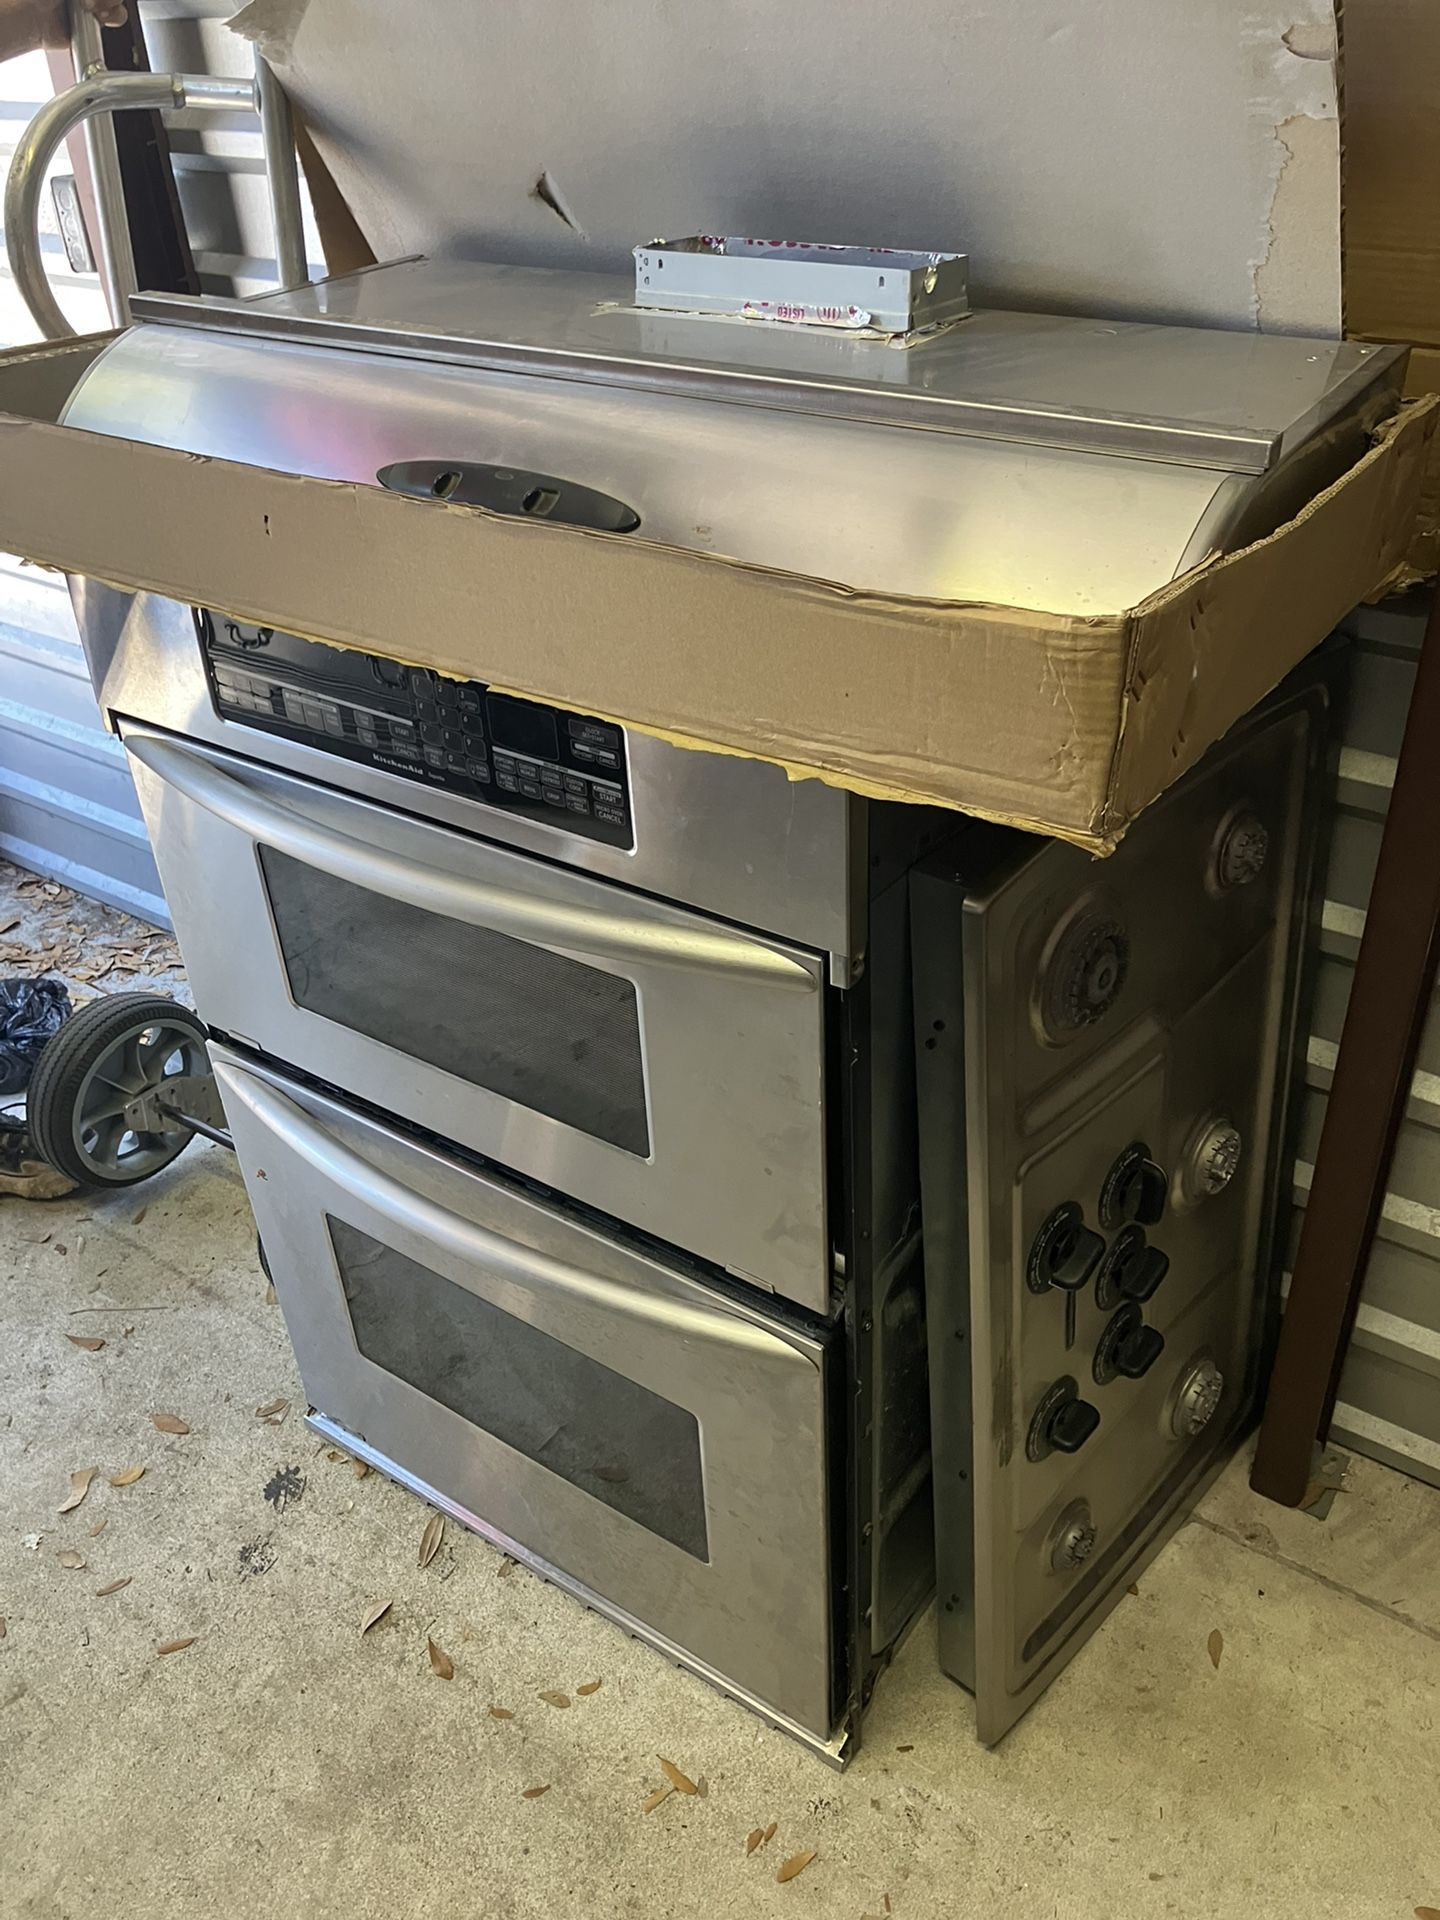 Kitchen Aid Appliance Set Microwave Stove Top Gas Burner Oven Range Hood 